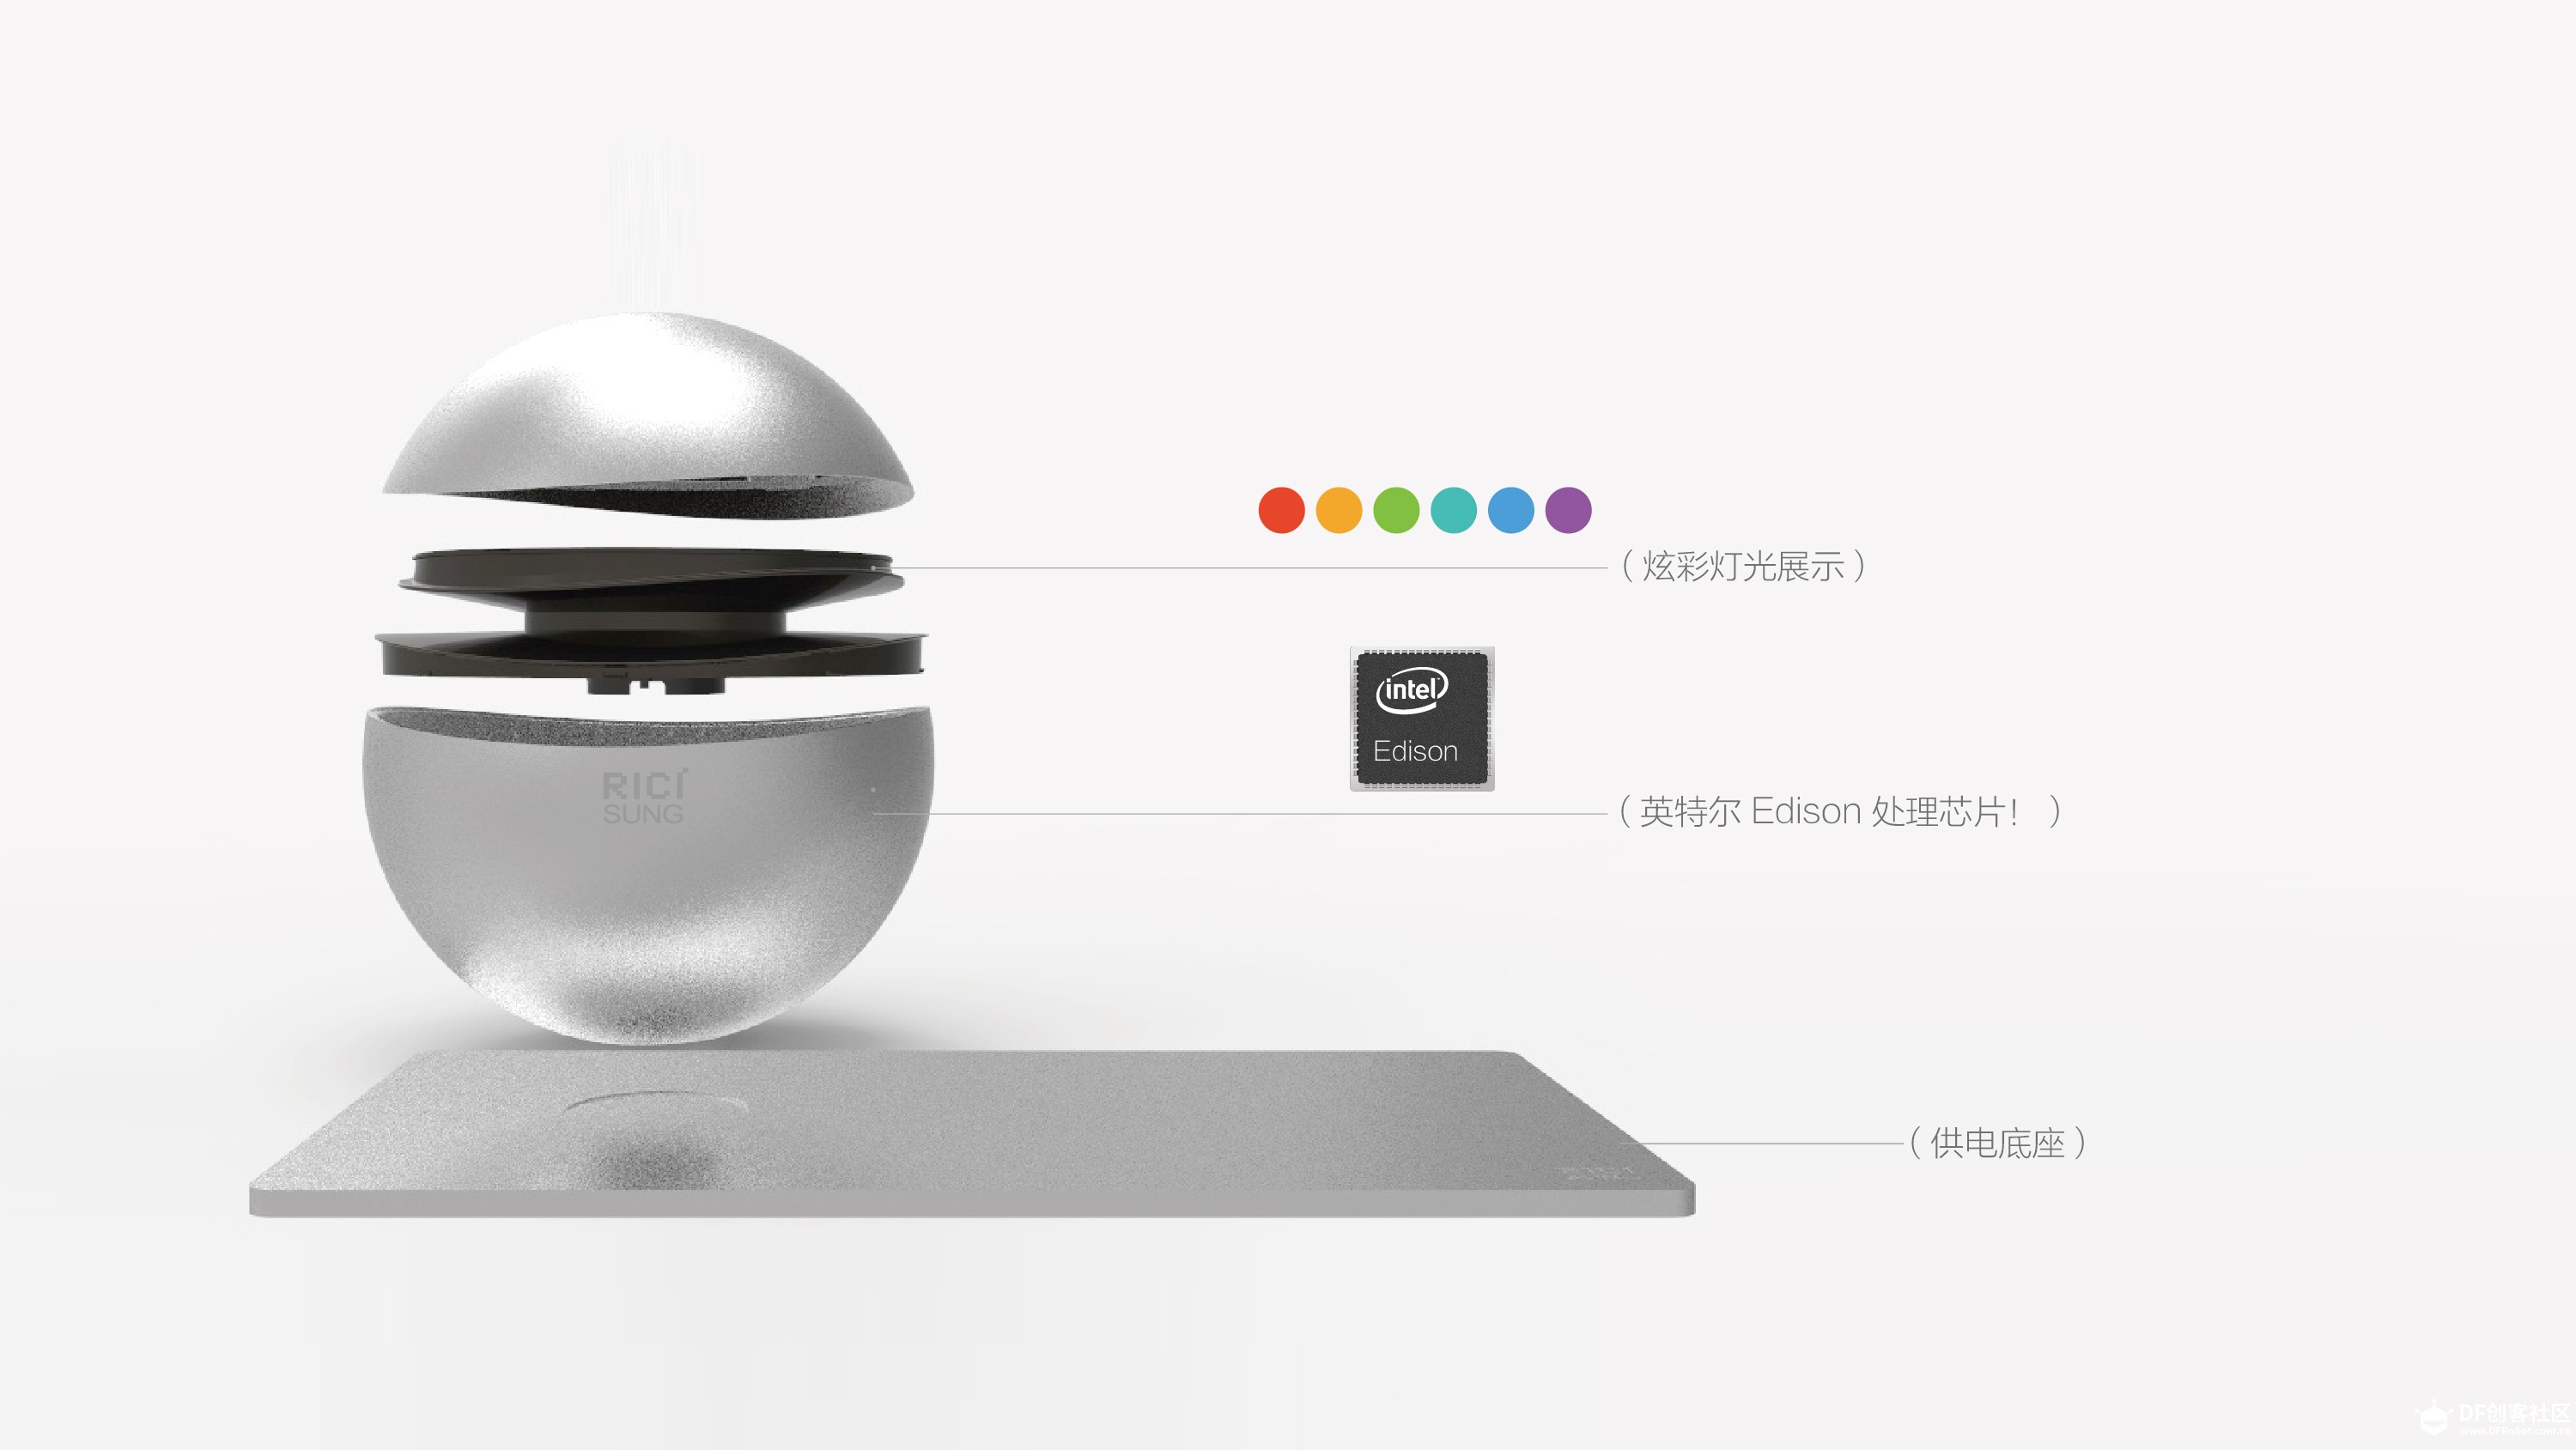 RICI-SUNG 基于 Edision  开发的空气检测球（air ball）图5